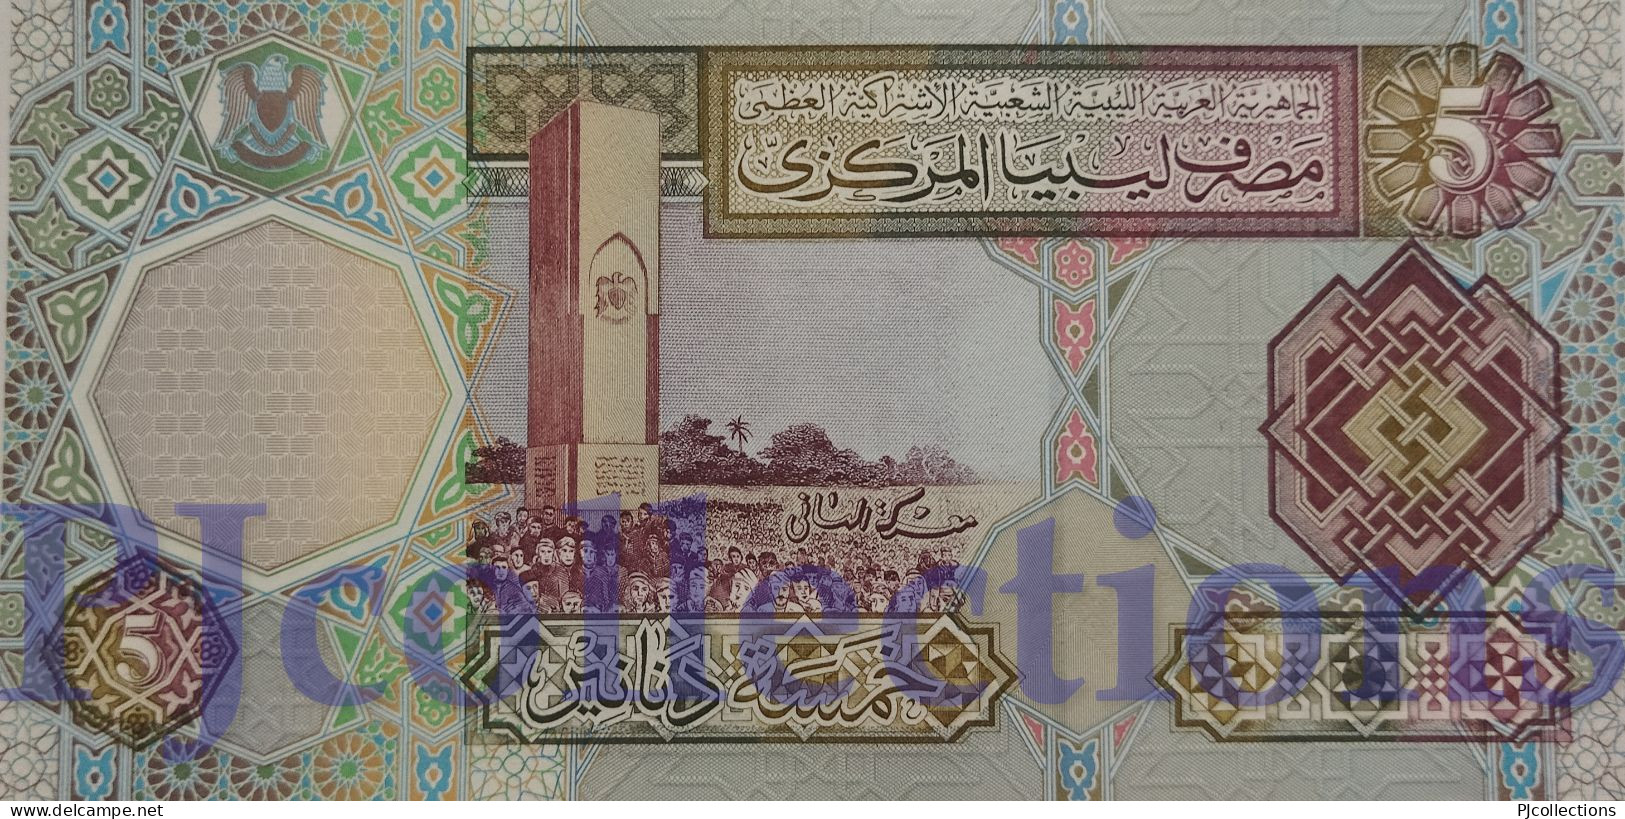 LIBYA 5 DINARS 2002 PICK 65a UNC - Libye